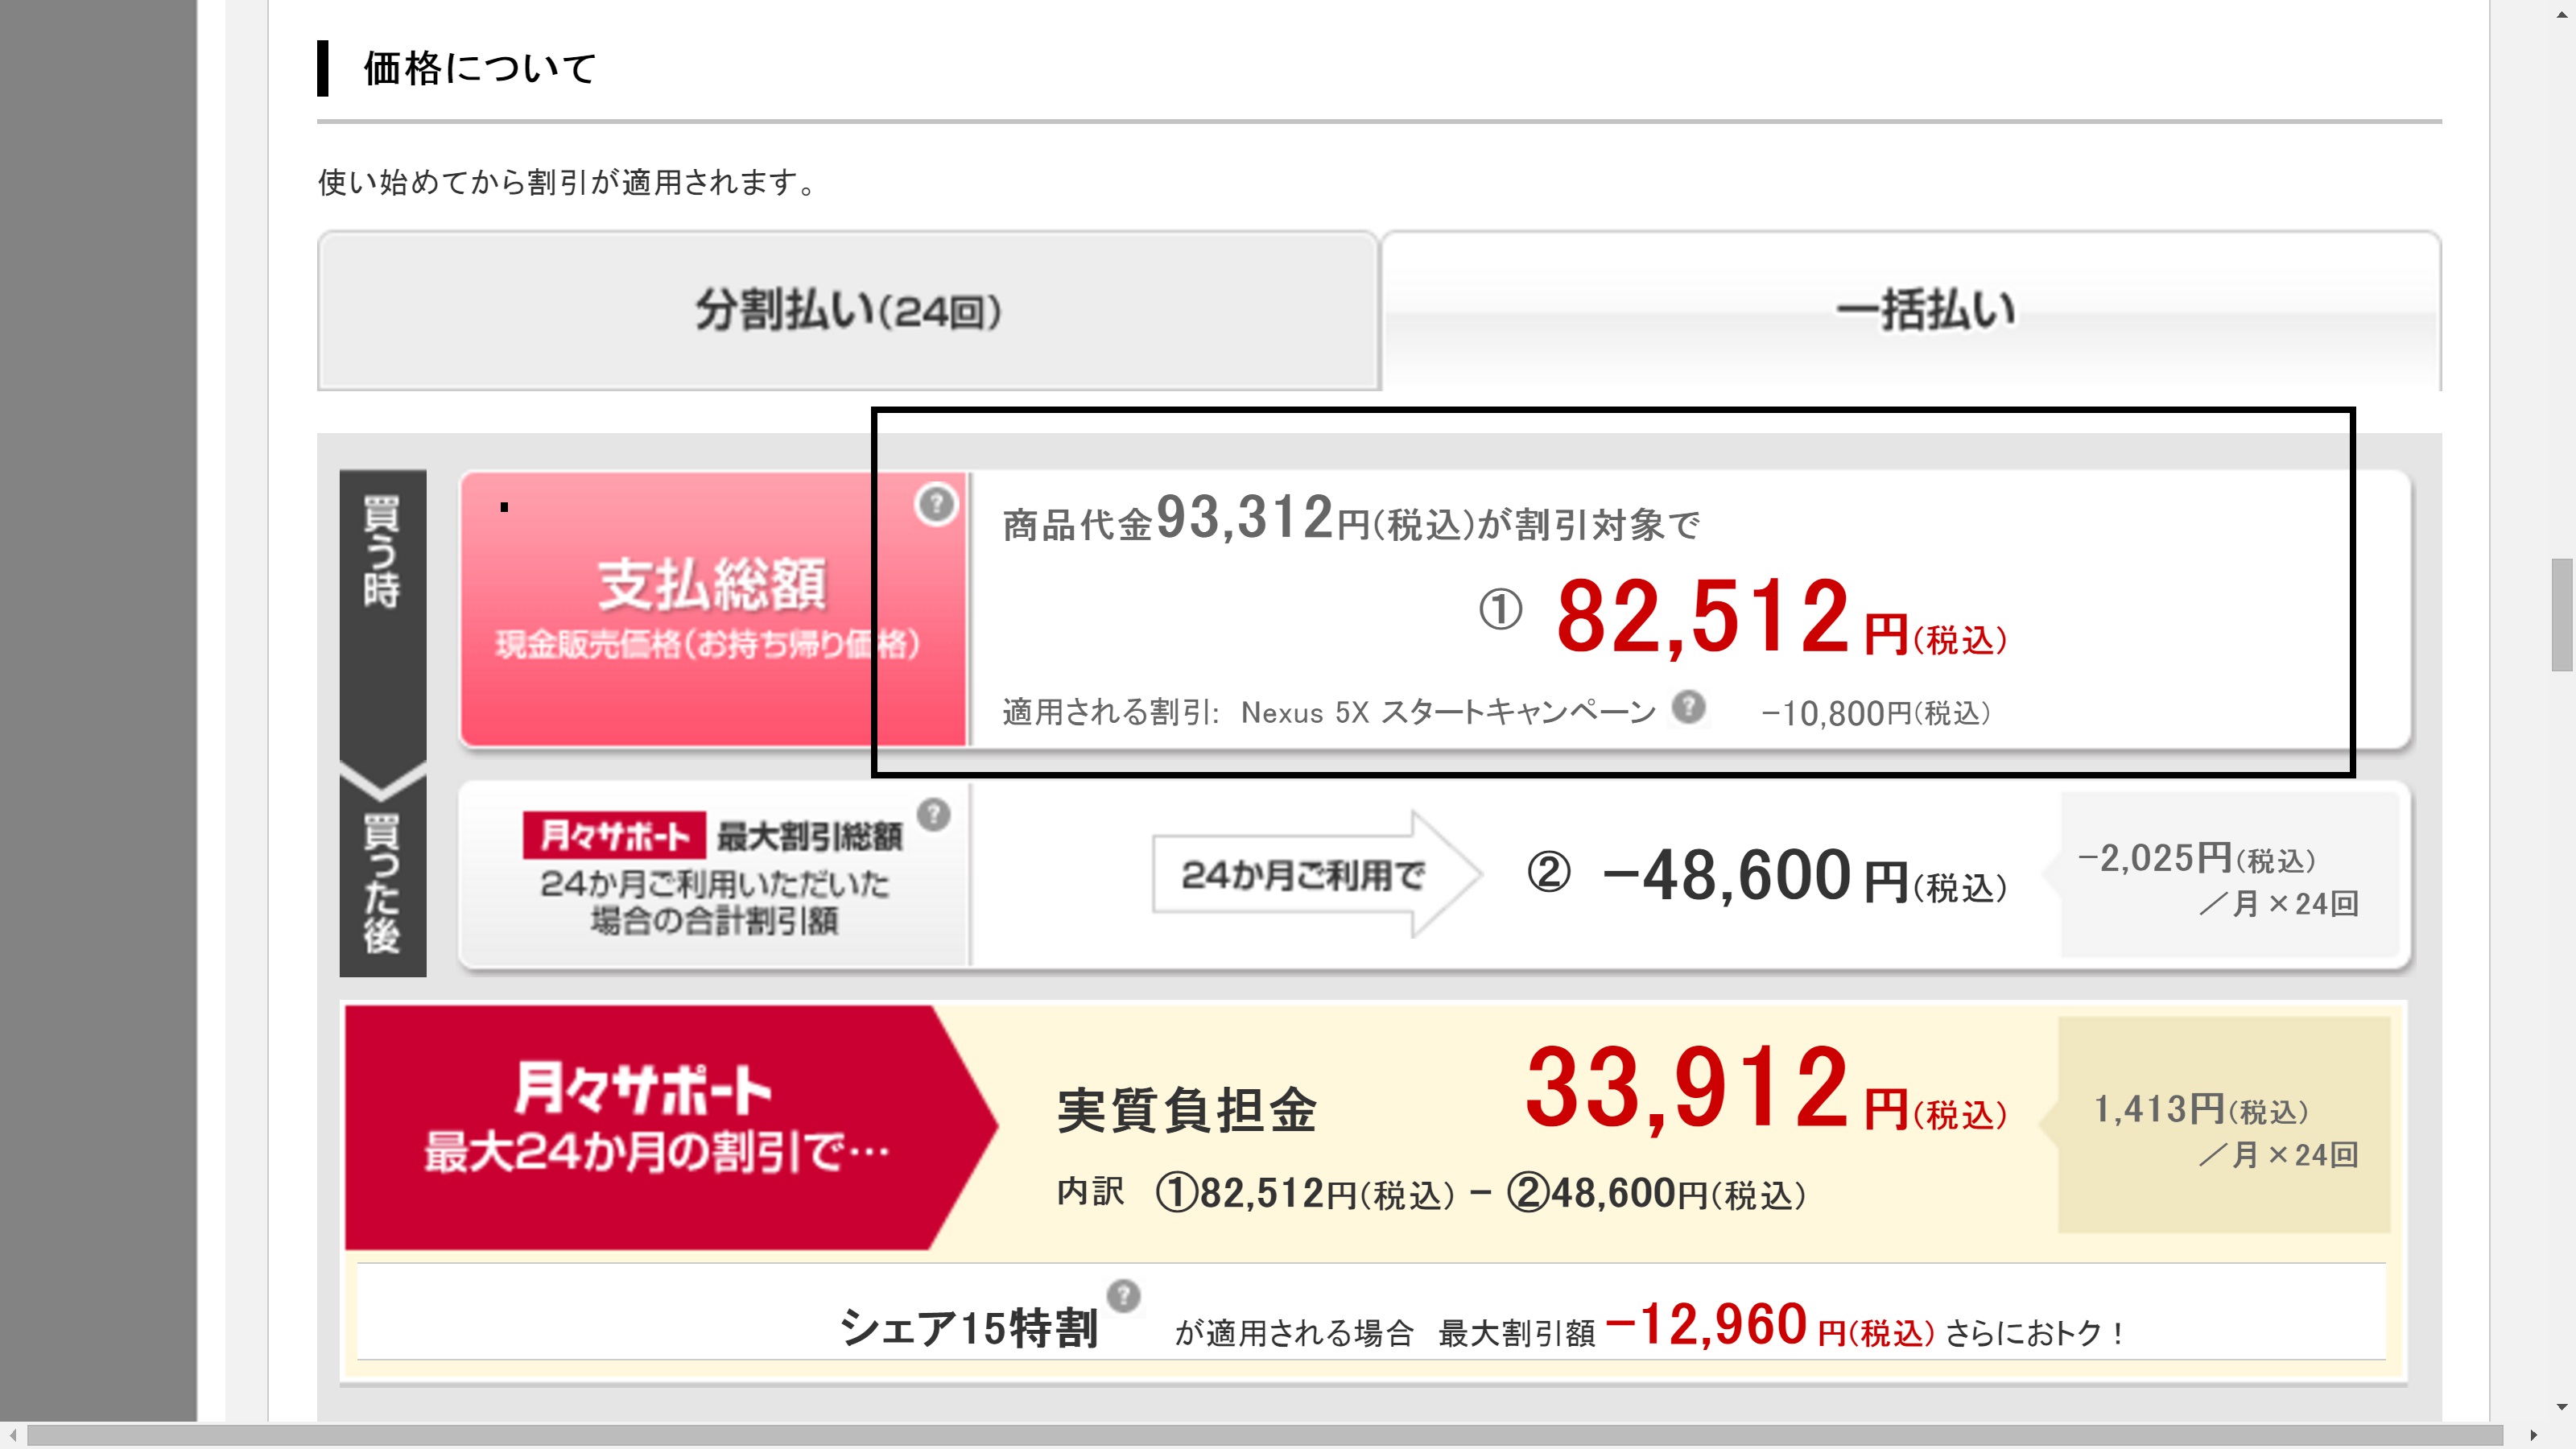 NTT docomo Nexus 5X Pricing